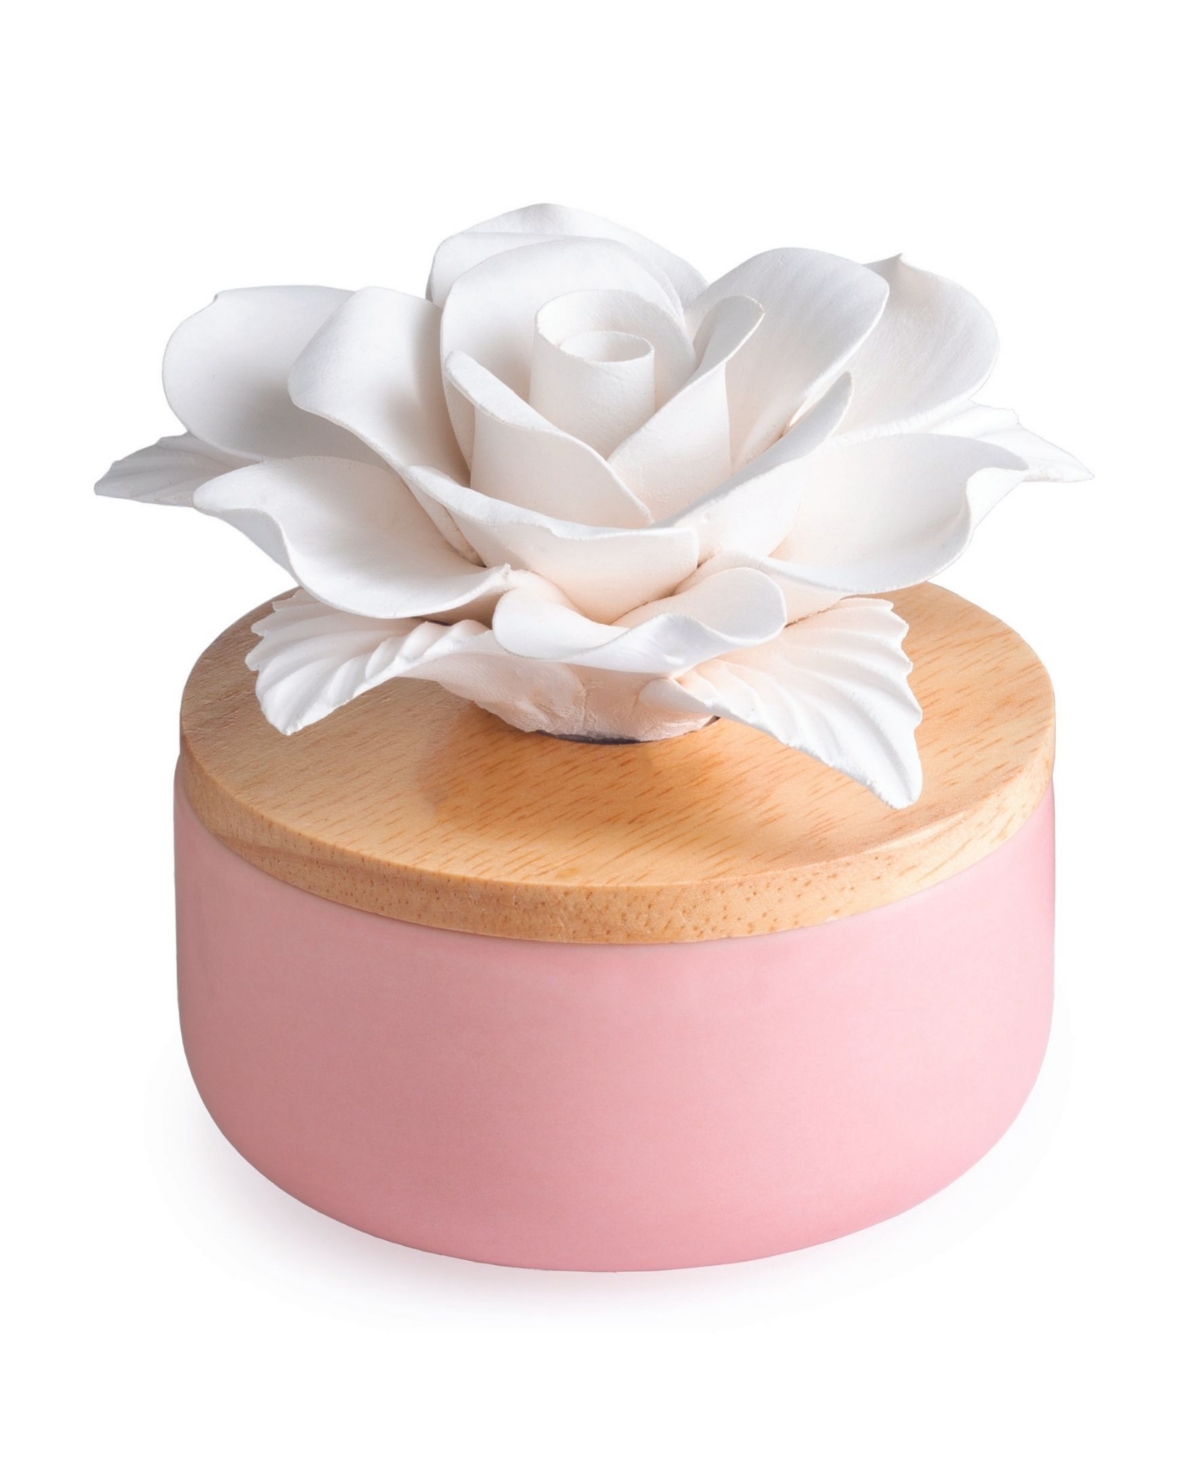 Rose Porcelain Aroma Diffuser 15 ml Peppermint Oil, Set of 4 - Light Pastel Pink